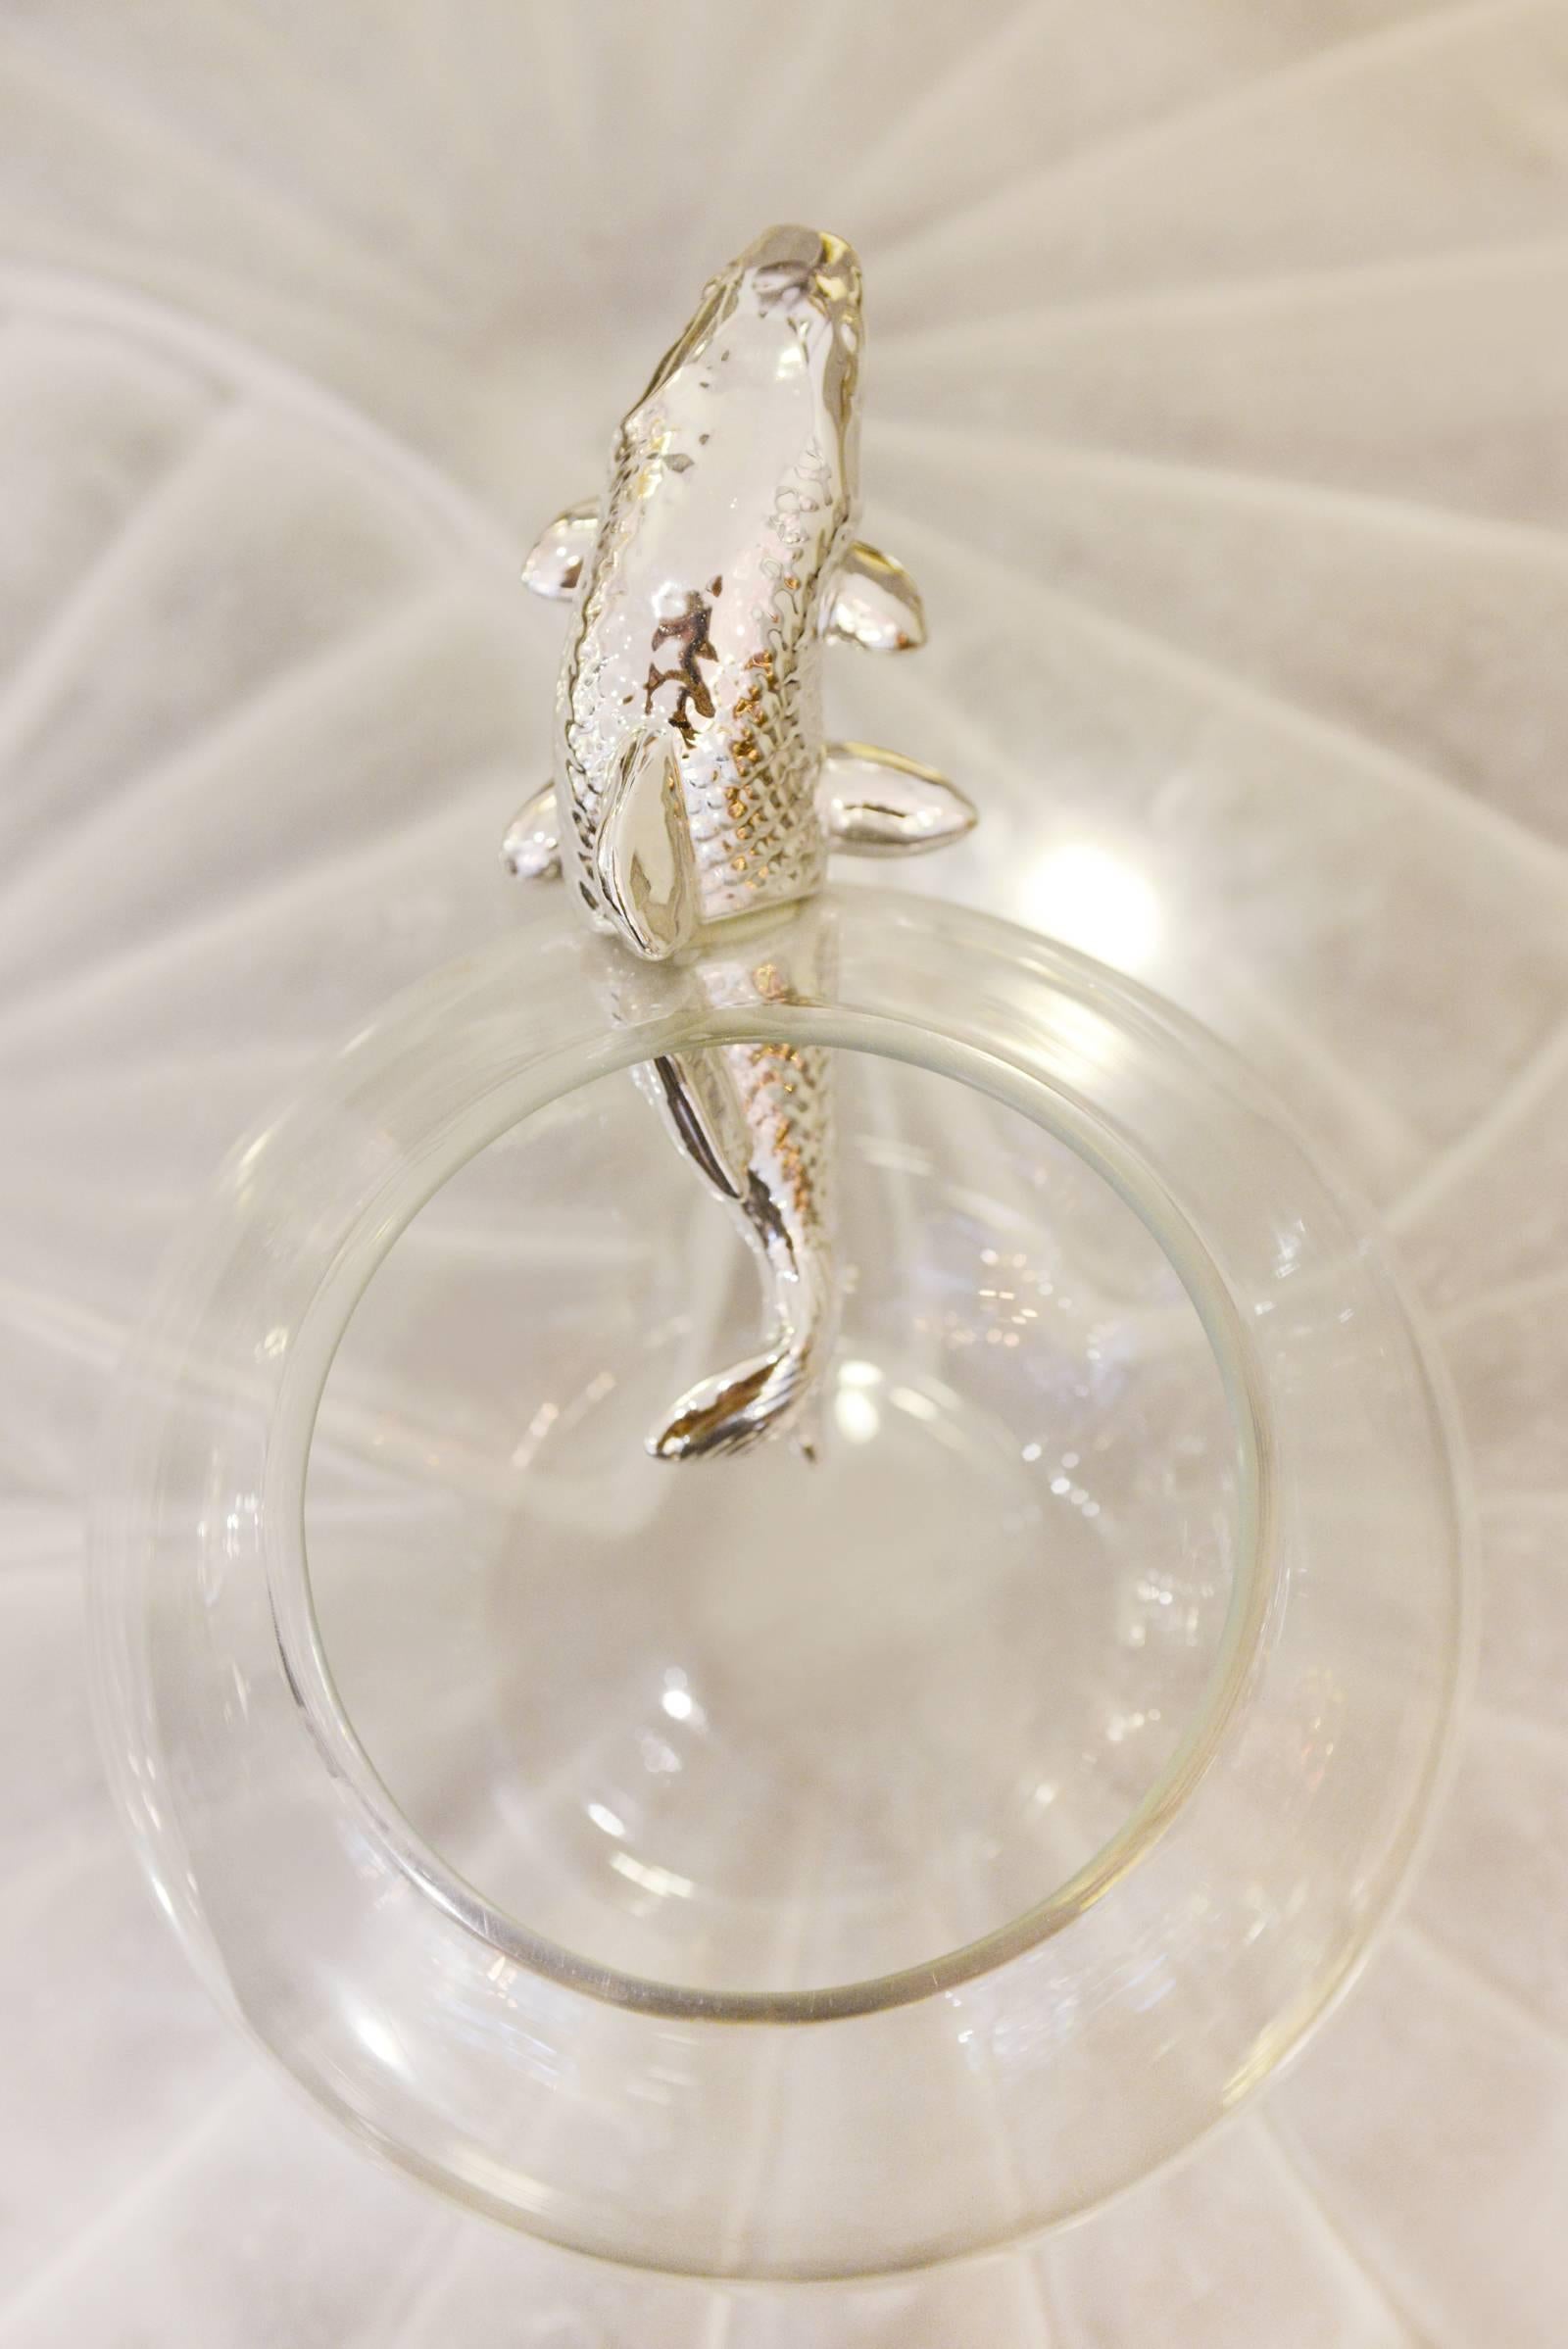 Contemporary Vase Silver Fish in Ceramic